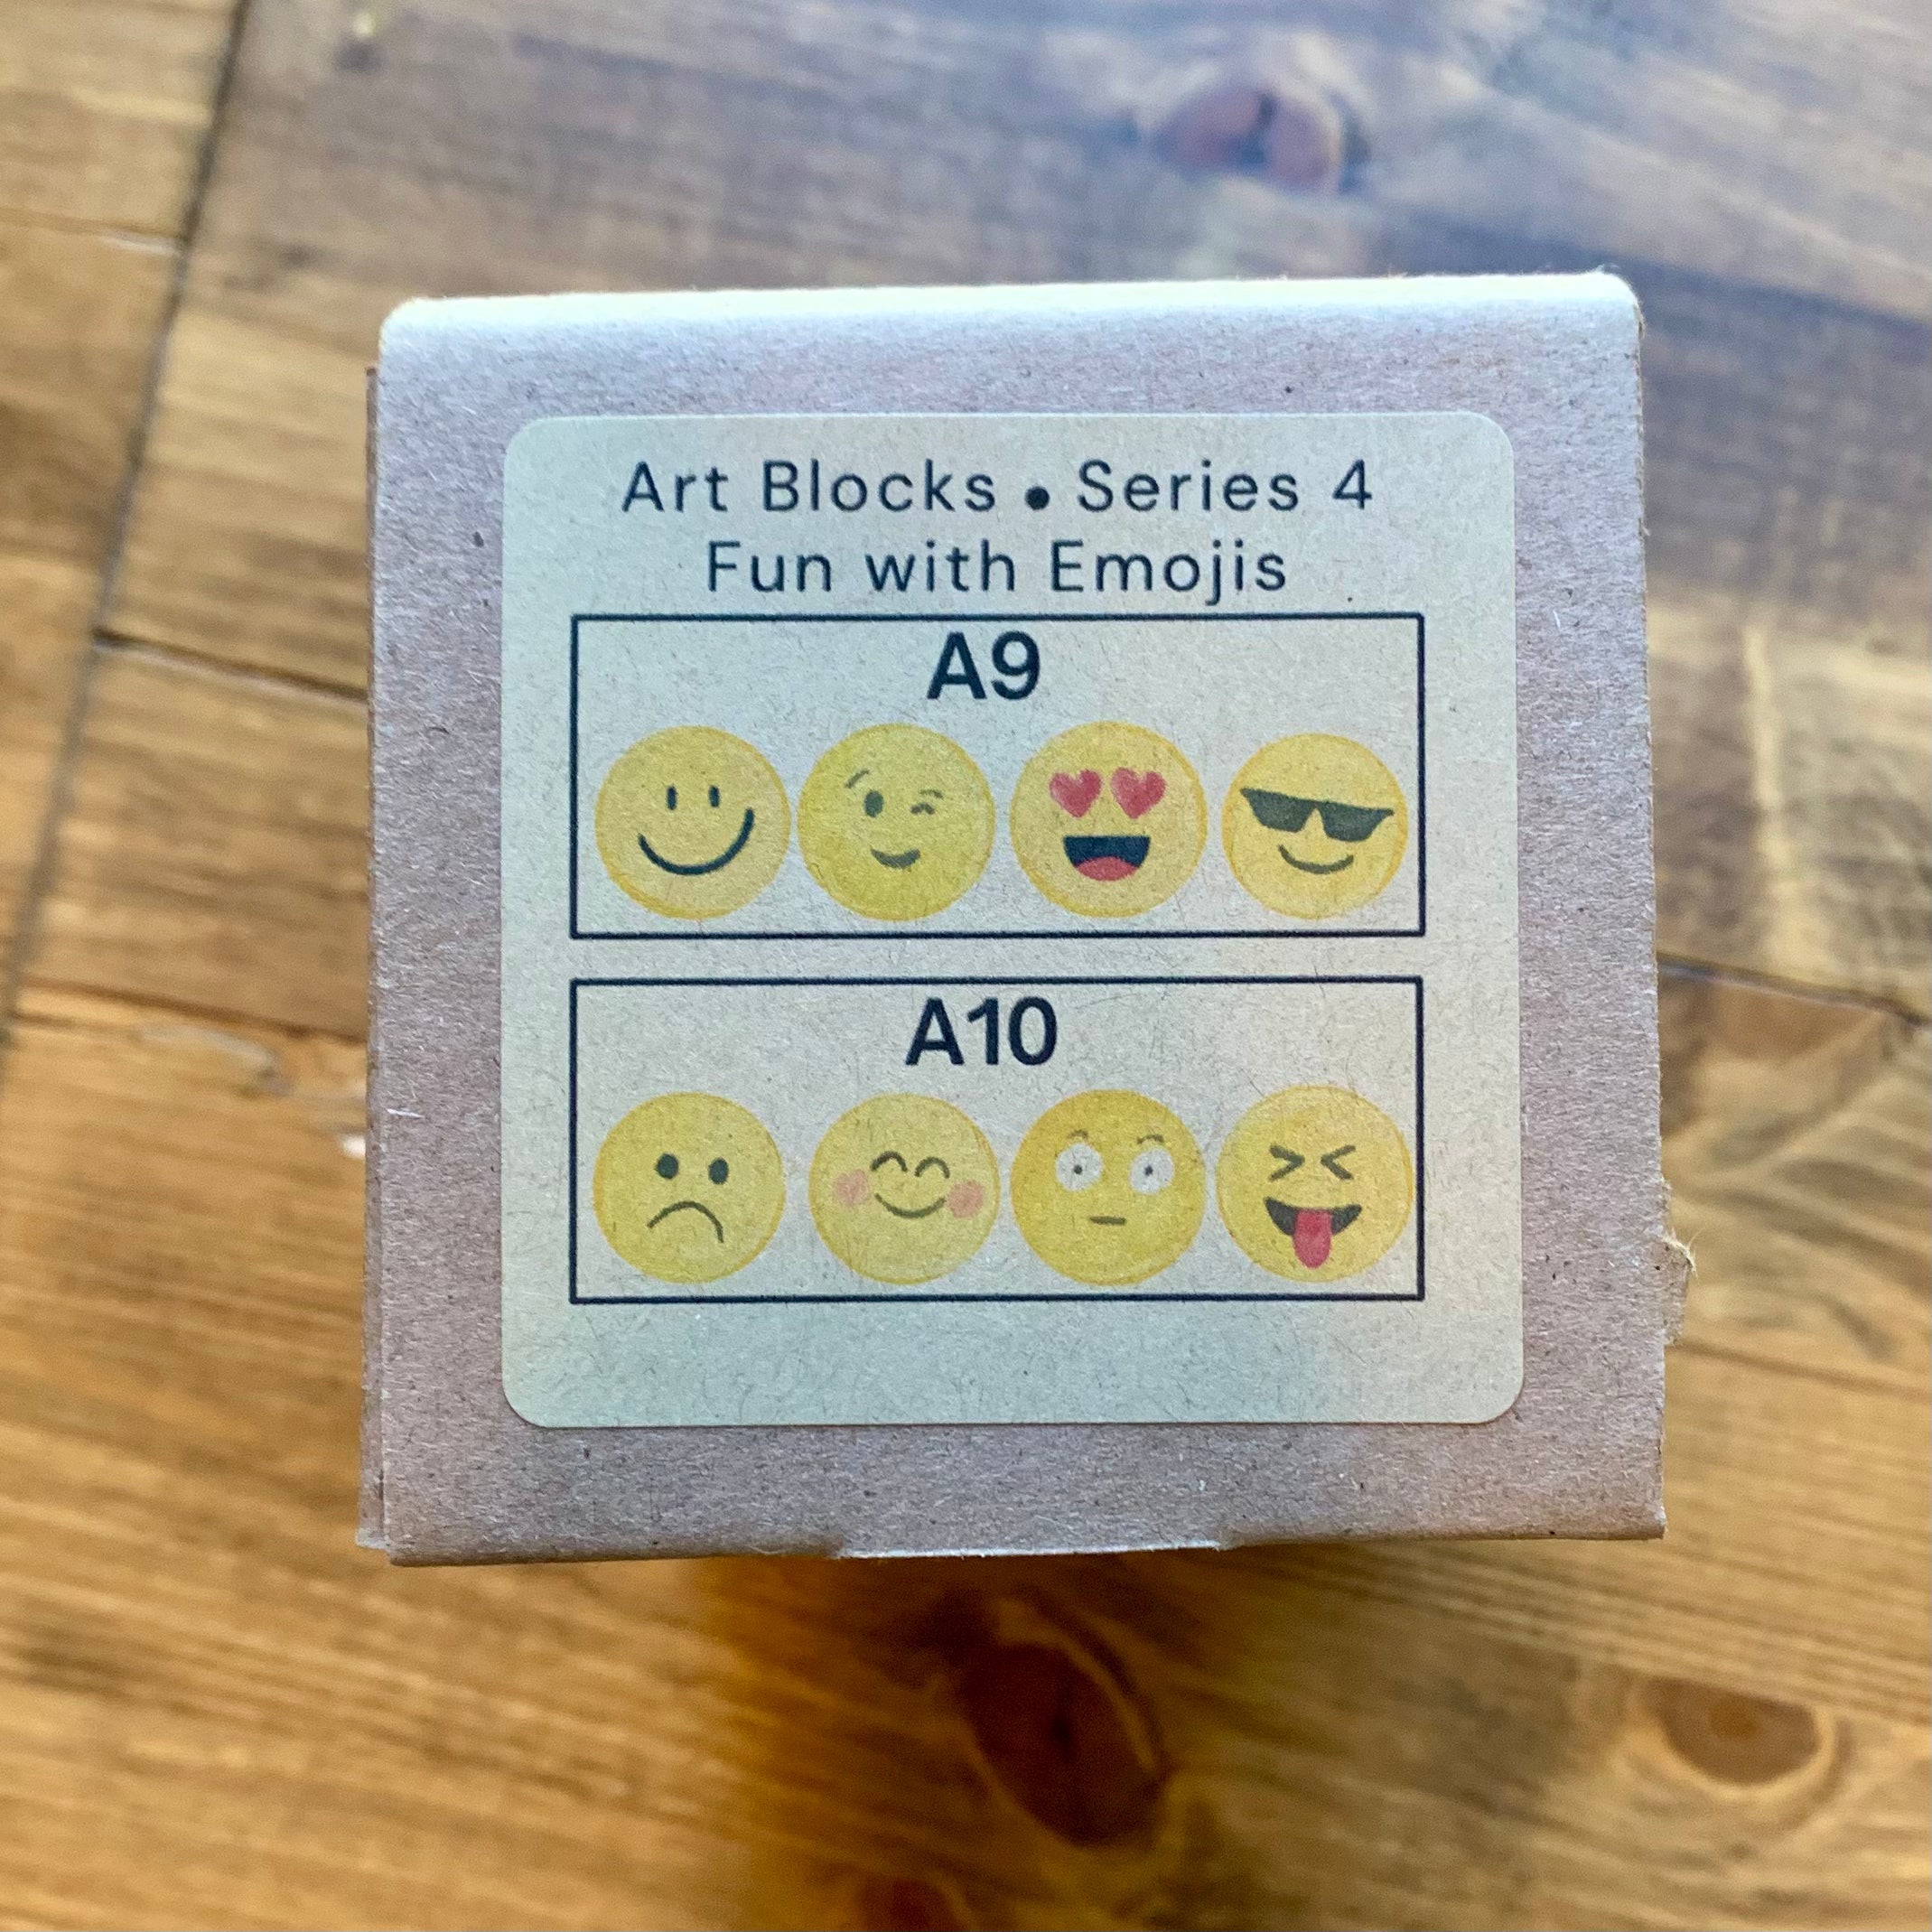 Art Blocks - Series 4 - Fun with Emojis by Alli + Jean